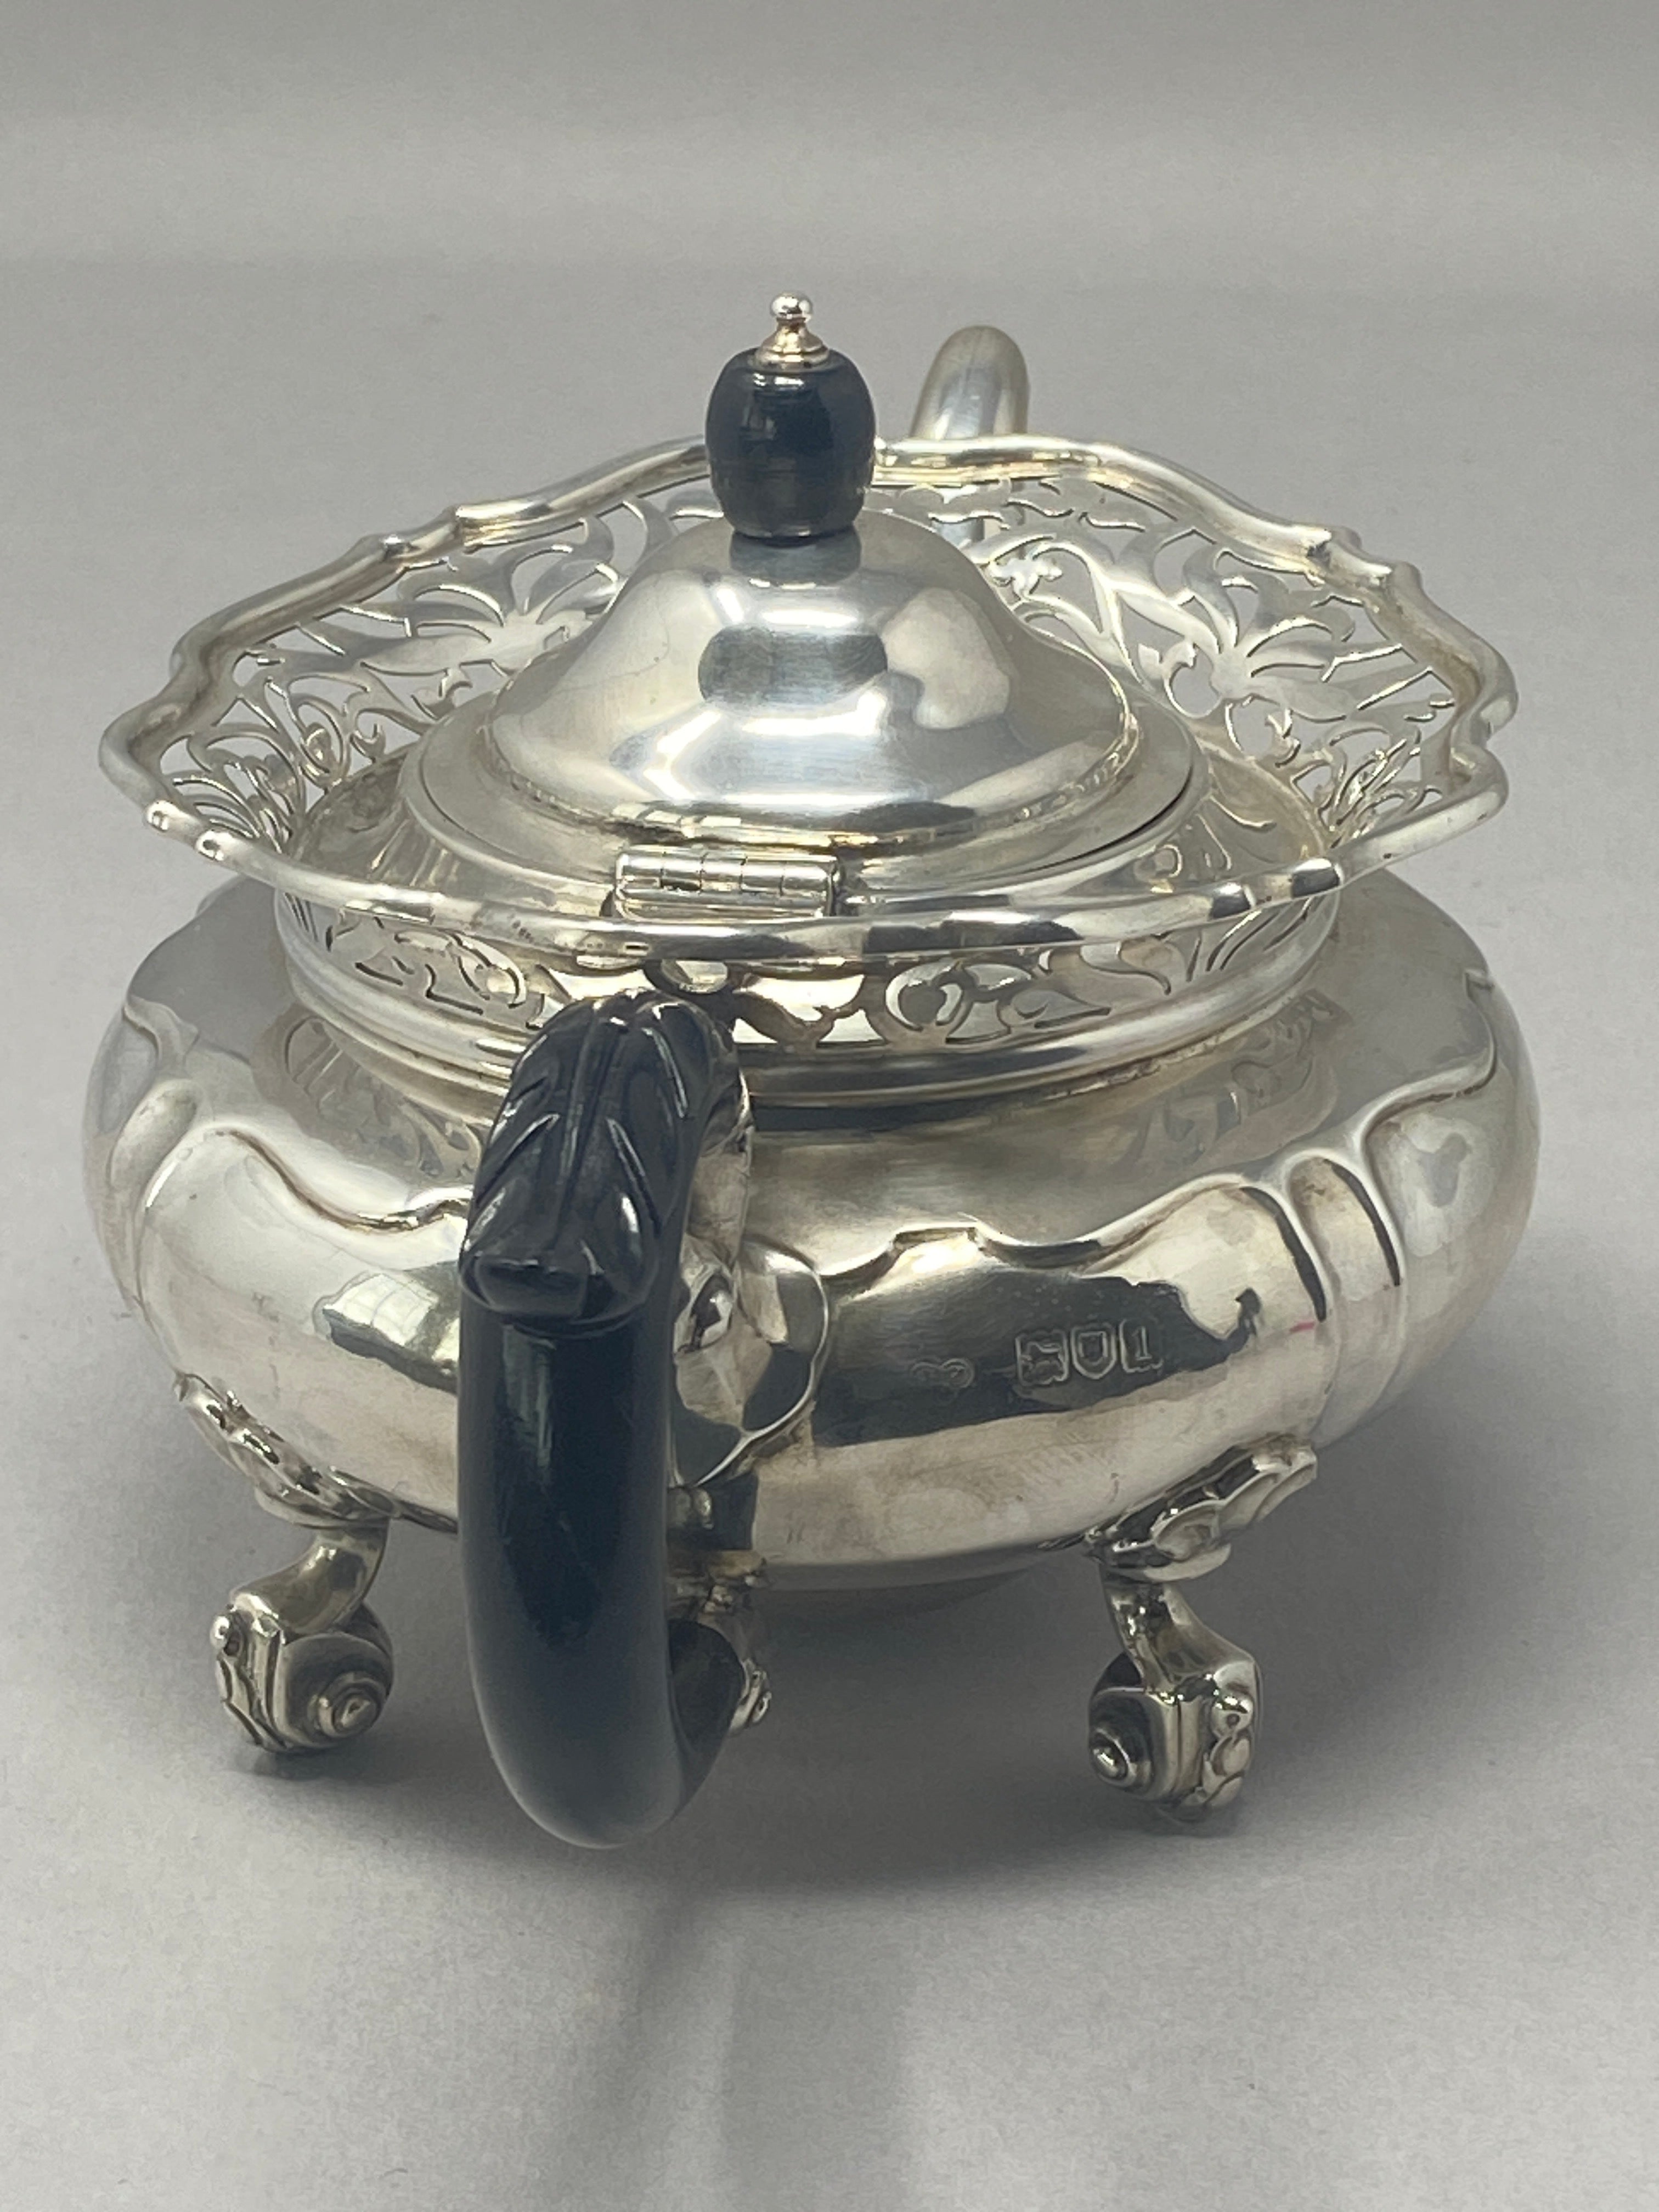 Antique Silver Tea Pot - Pierced Border